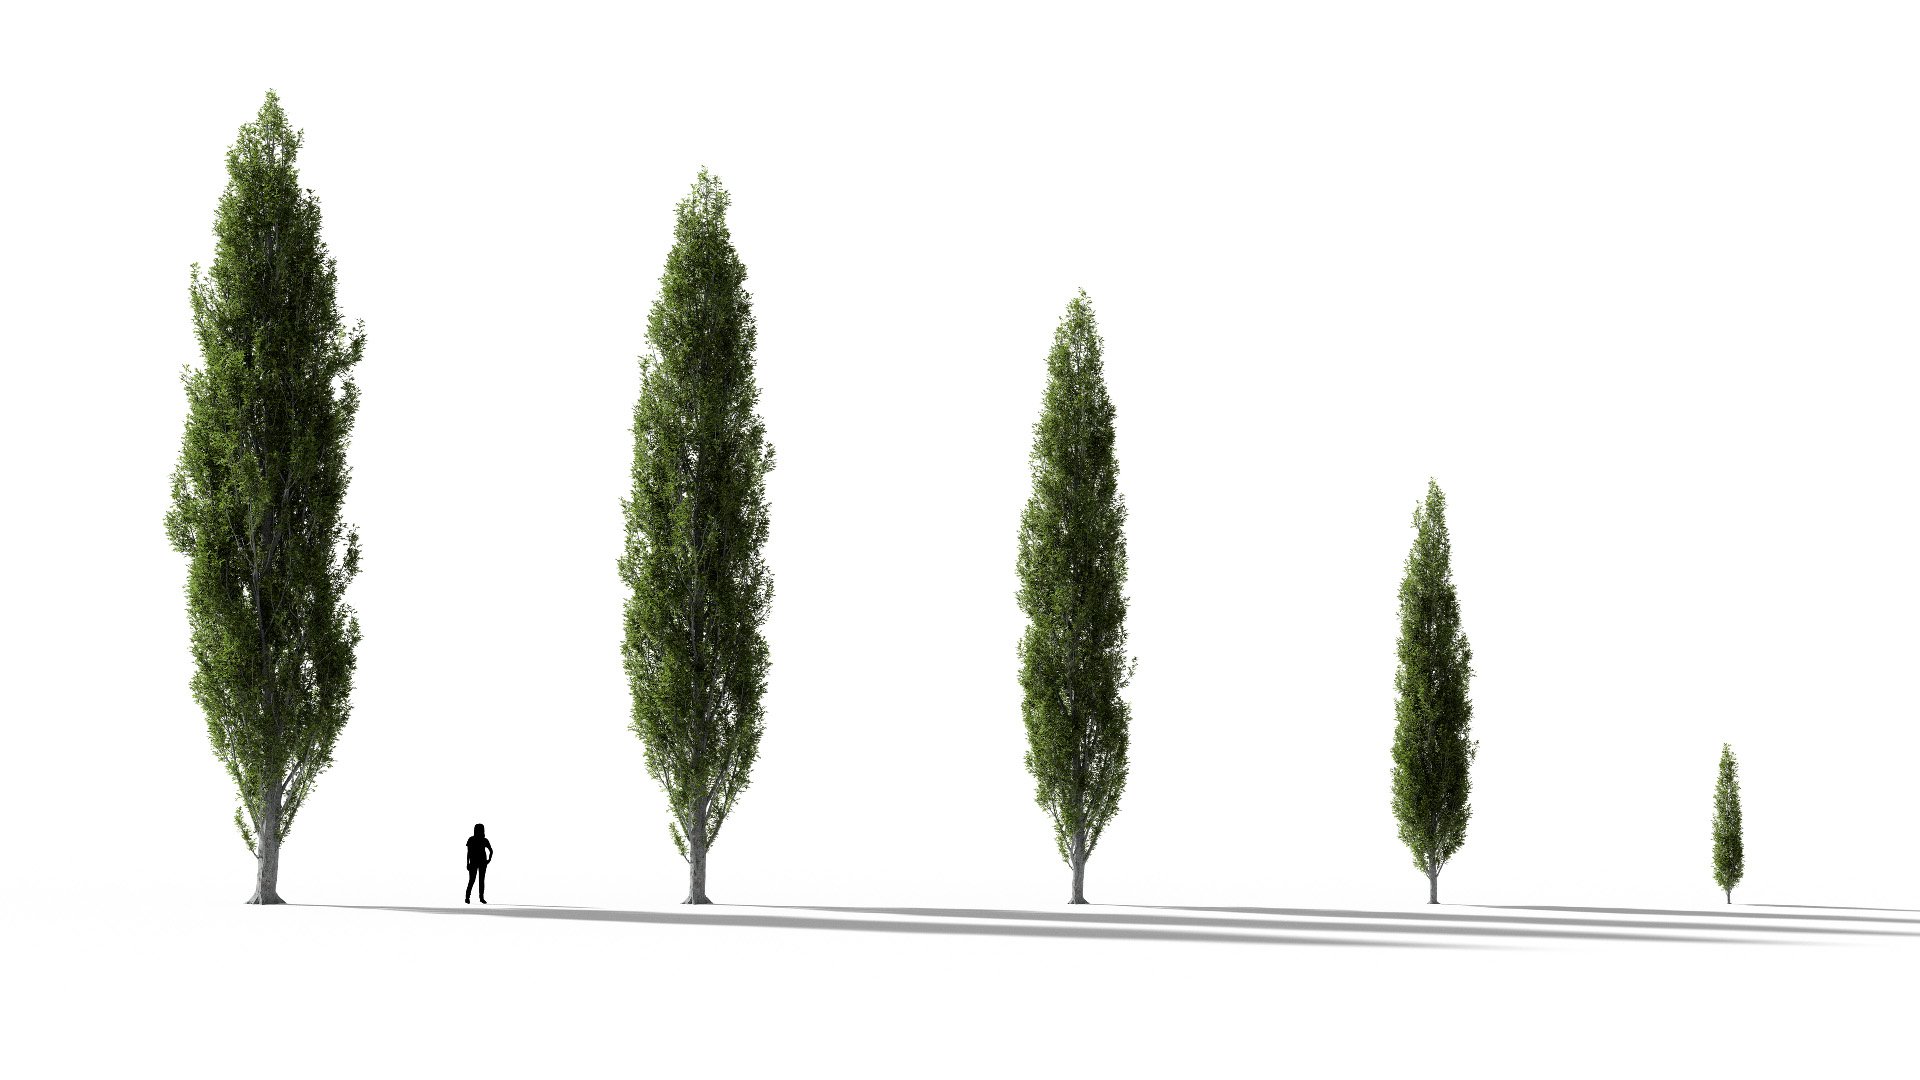 3D model of the Columnar swamp oak Quercus palustris 'Green Pillar' maturity variations